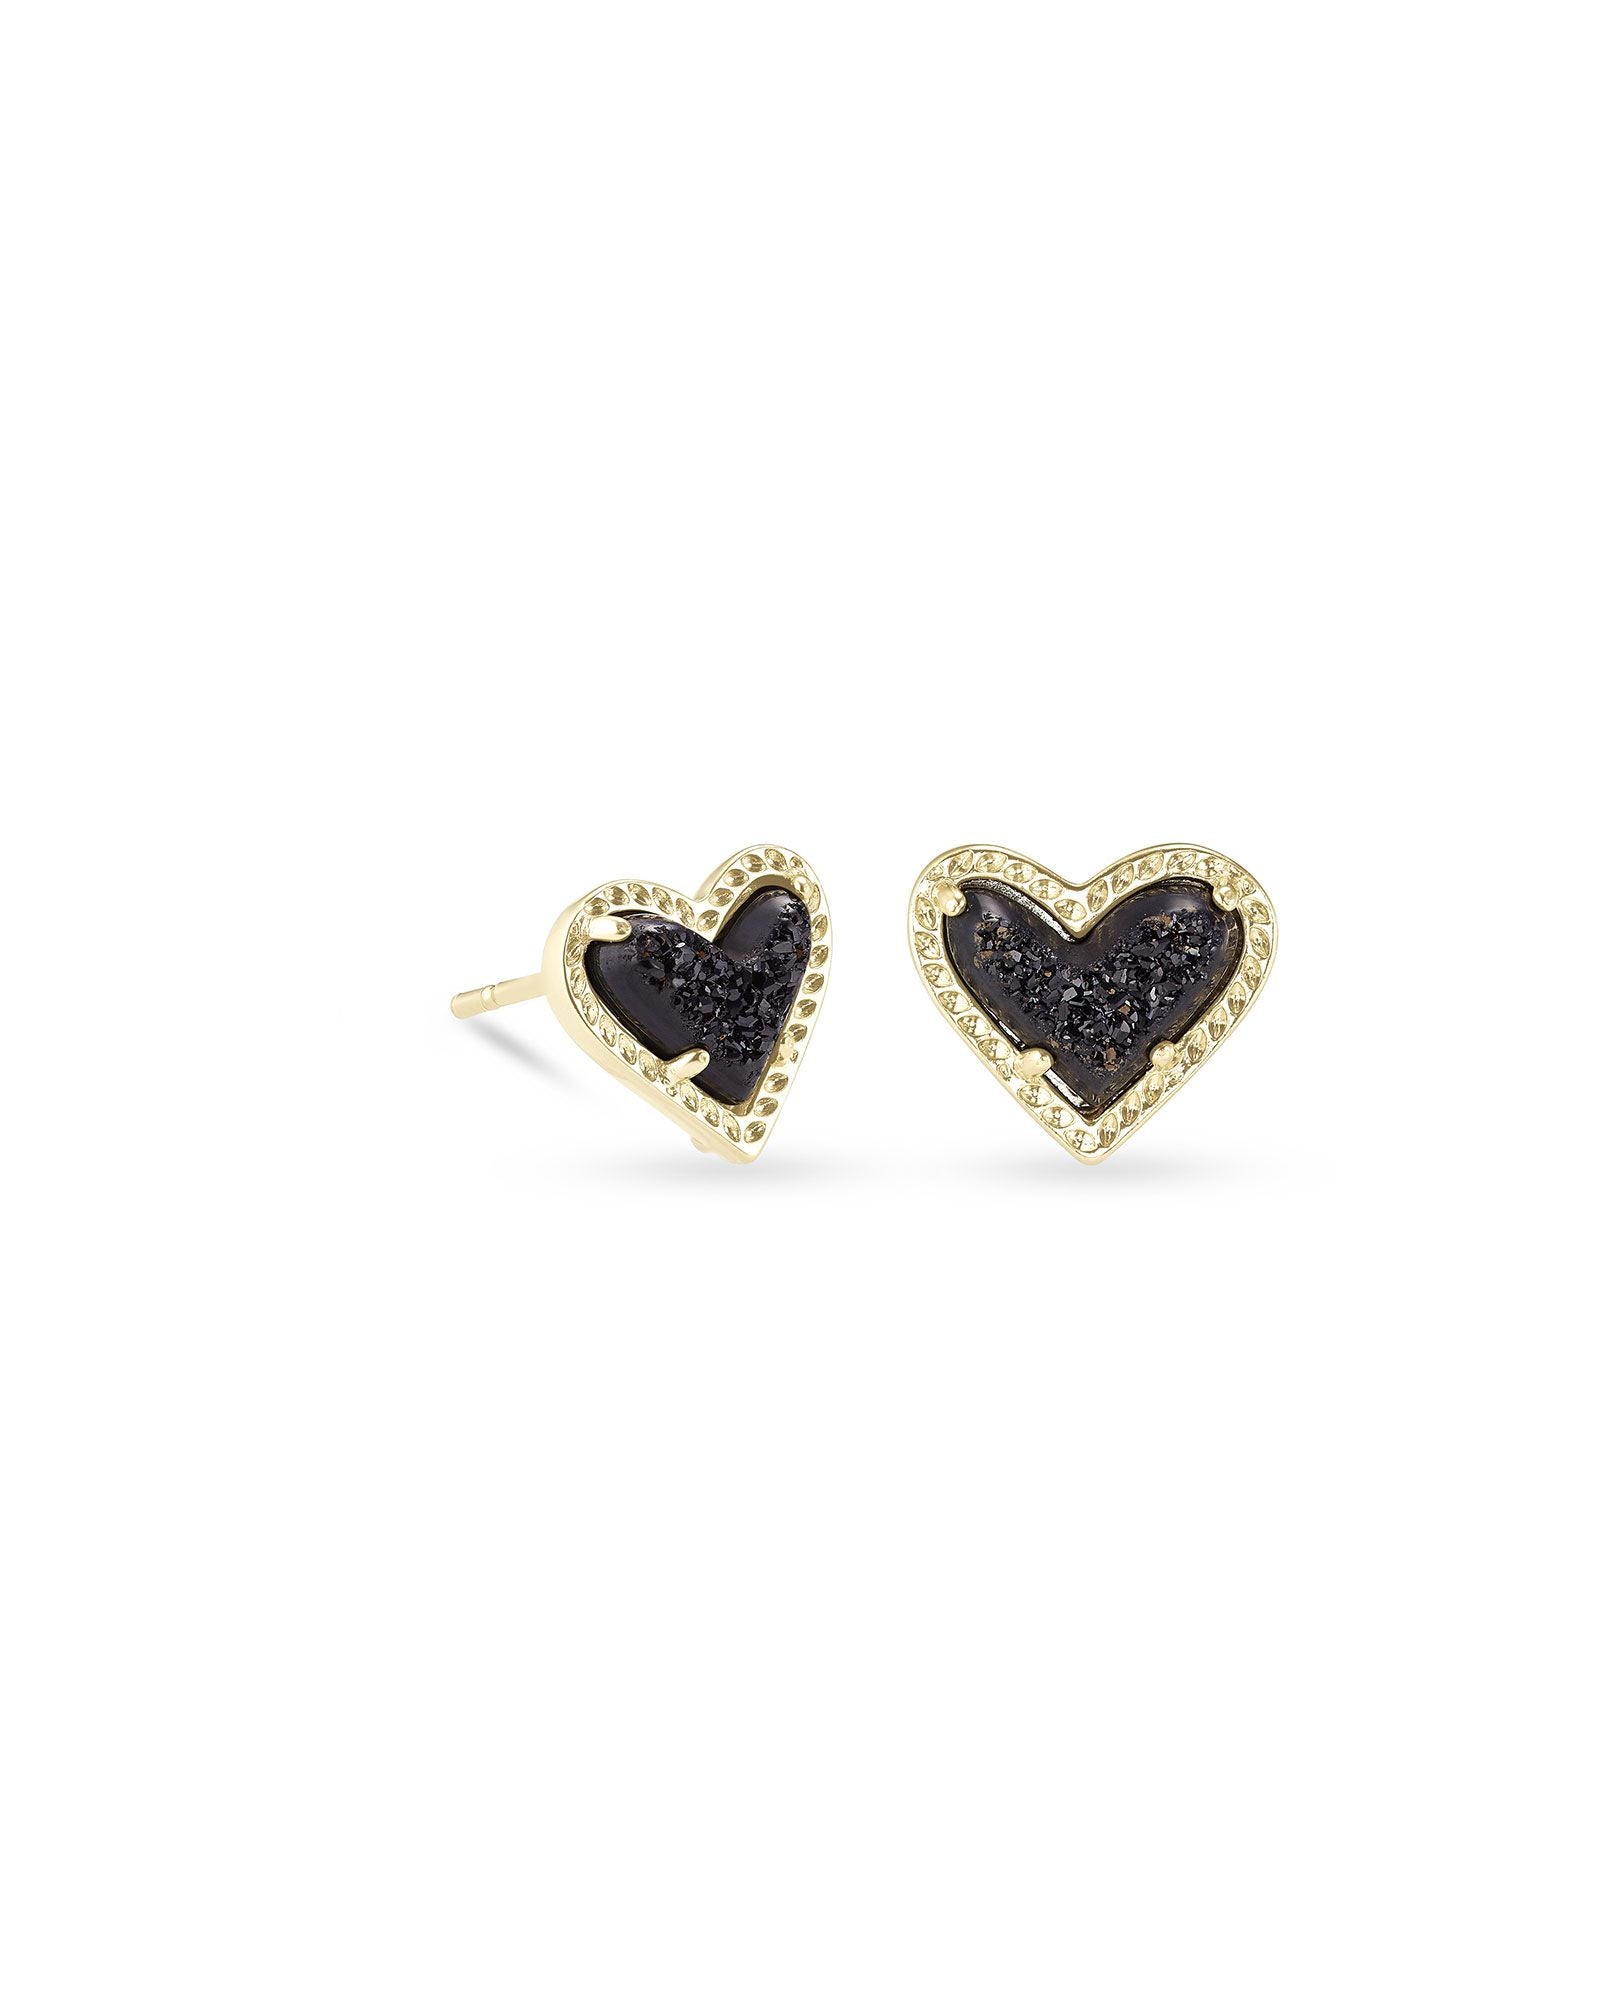 Ari Heart Gold Stud Earring in Black Drusy